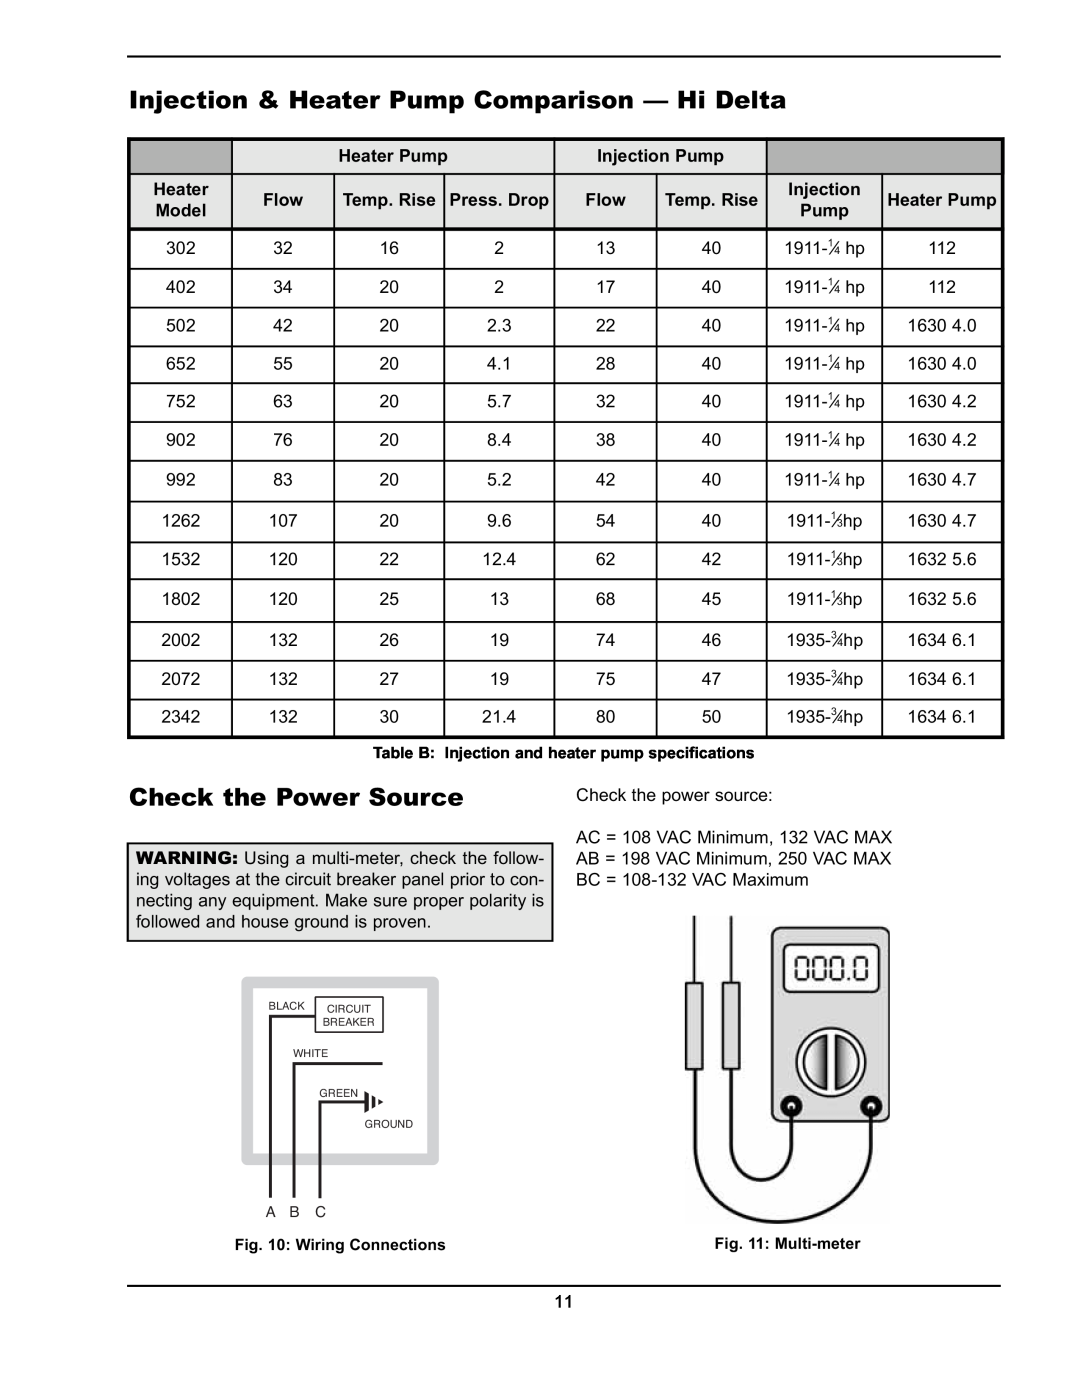 Raypak 241275 Injection & Heater Pump Comparison - Hi Delta, Check the Power Source, Injection Pump, Flow, Press. Drop 